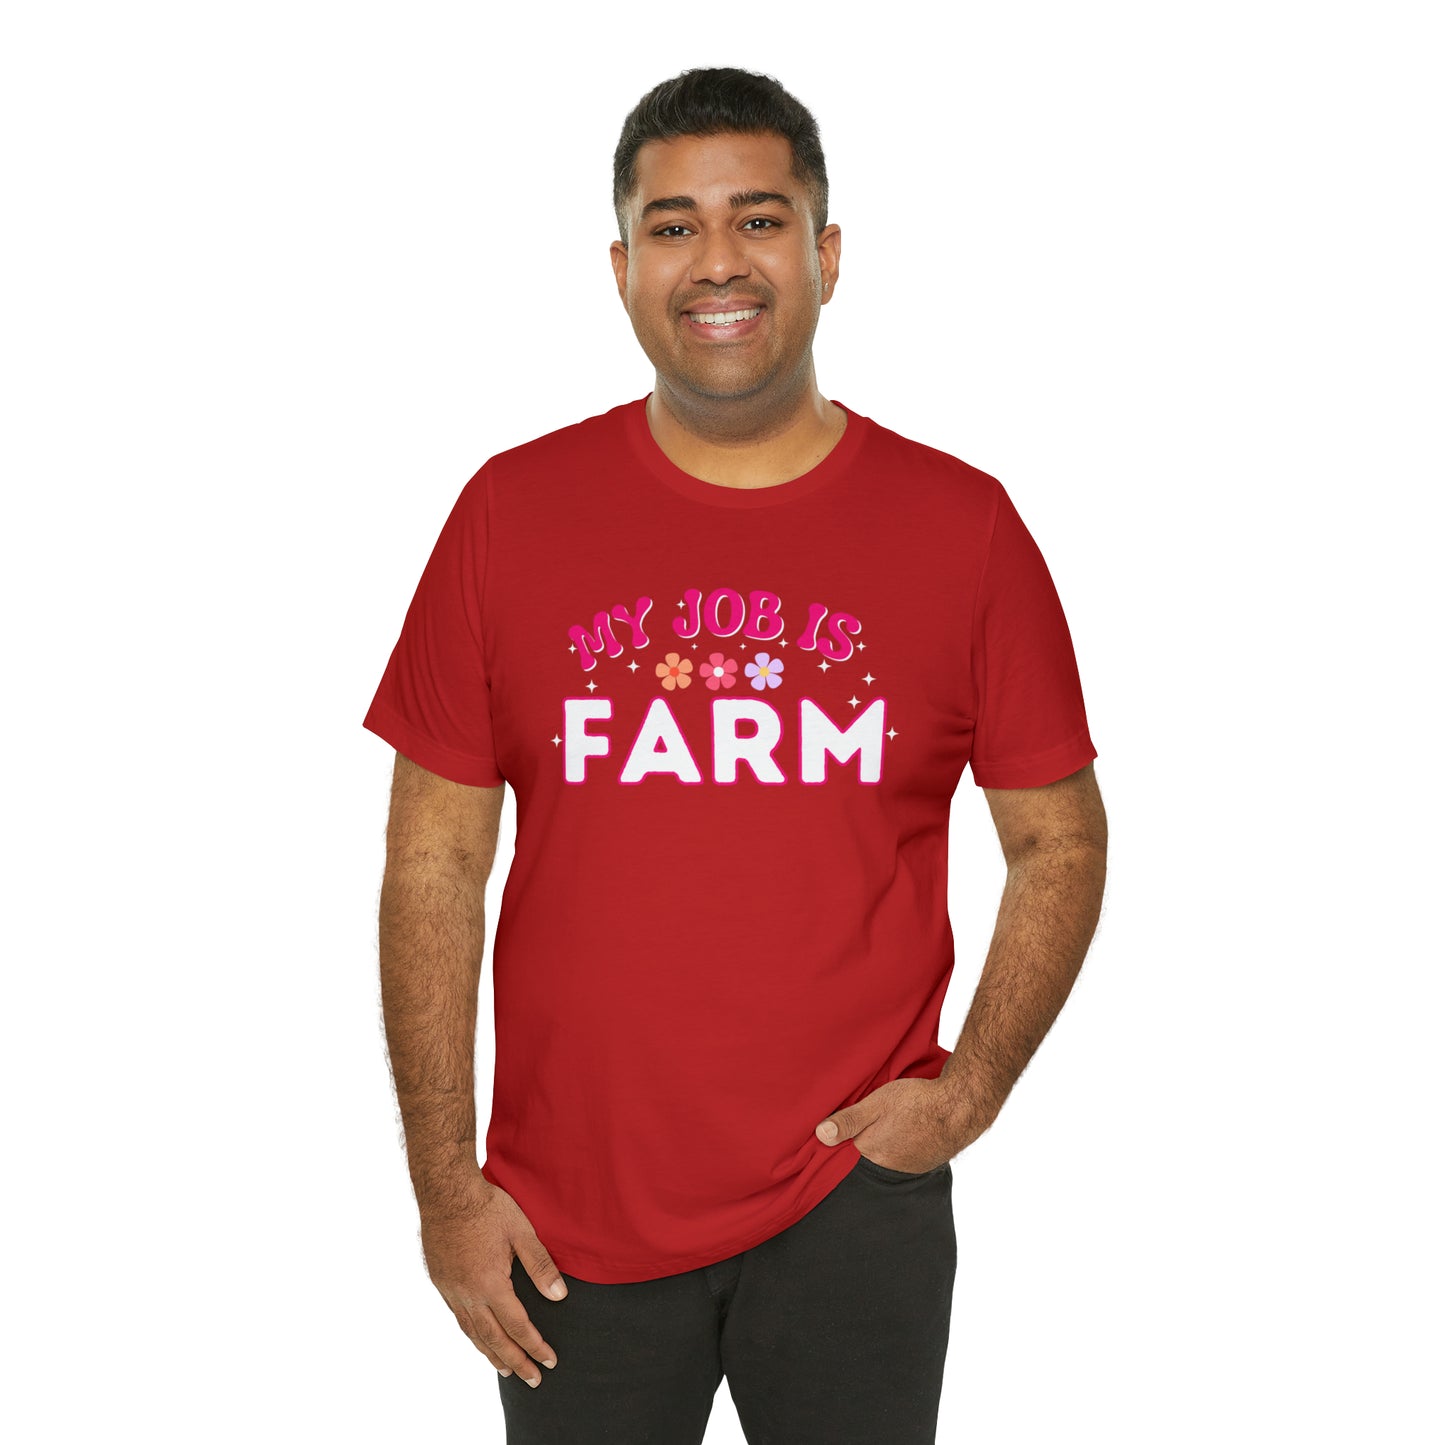 My Job is Farm Shirt Farmer Shirt Farming Shirt Homestead Gardening Shirt